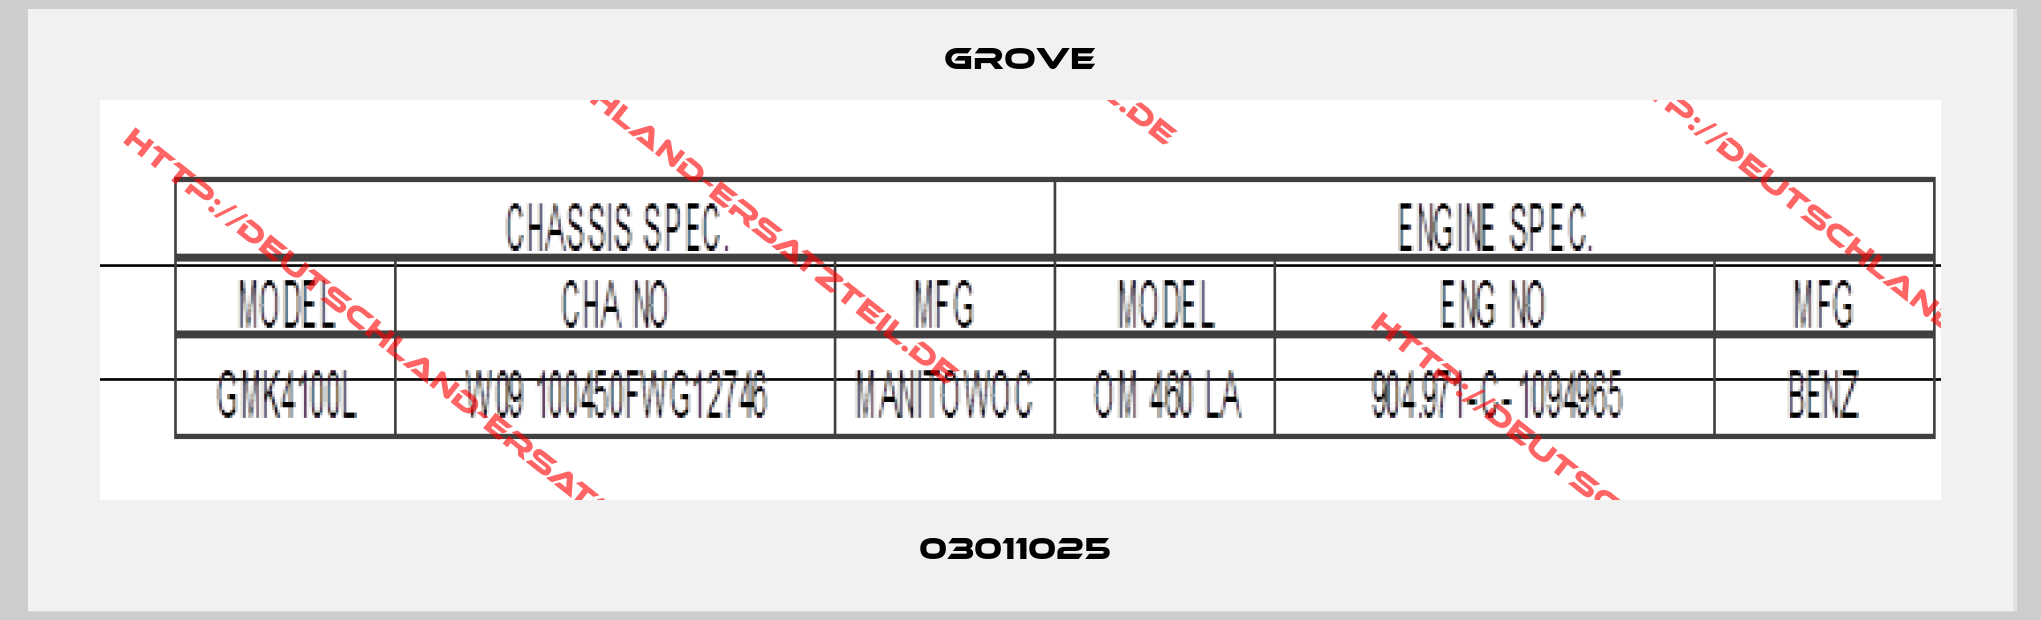 Grove-03011025 